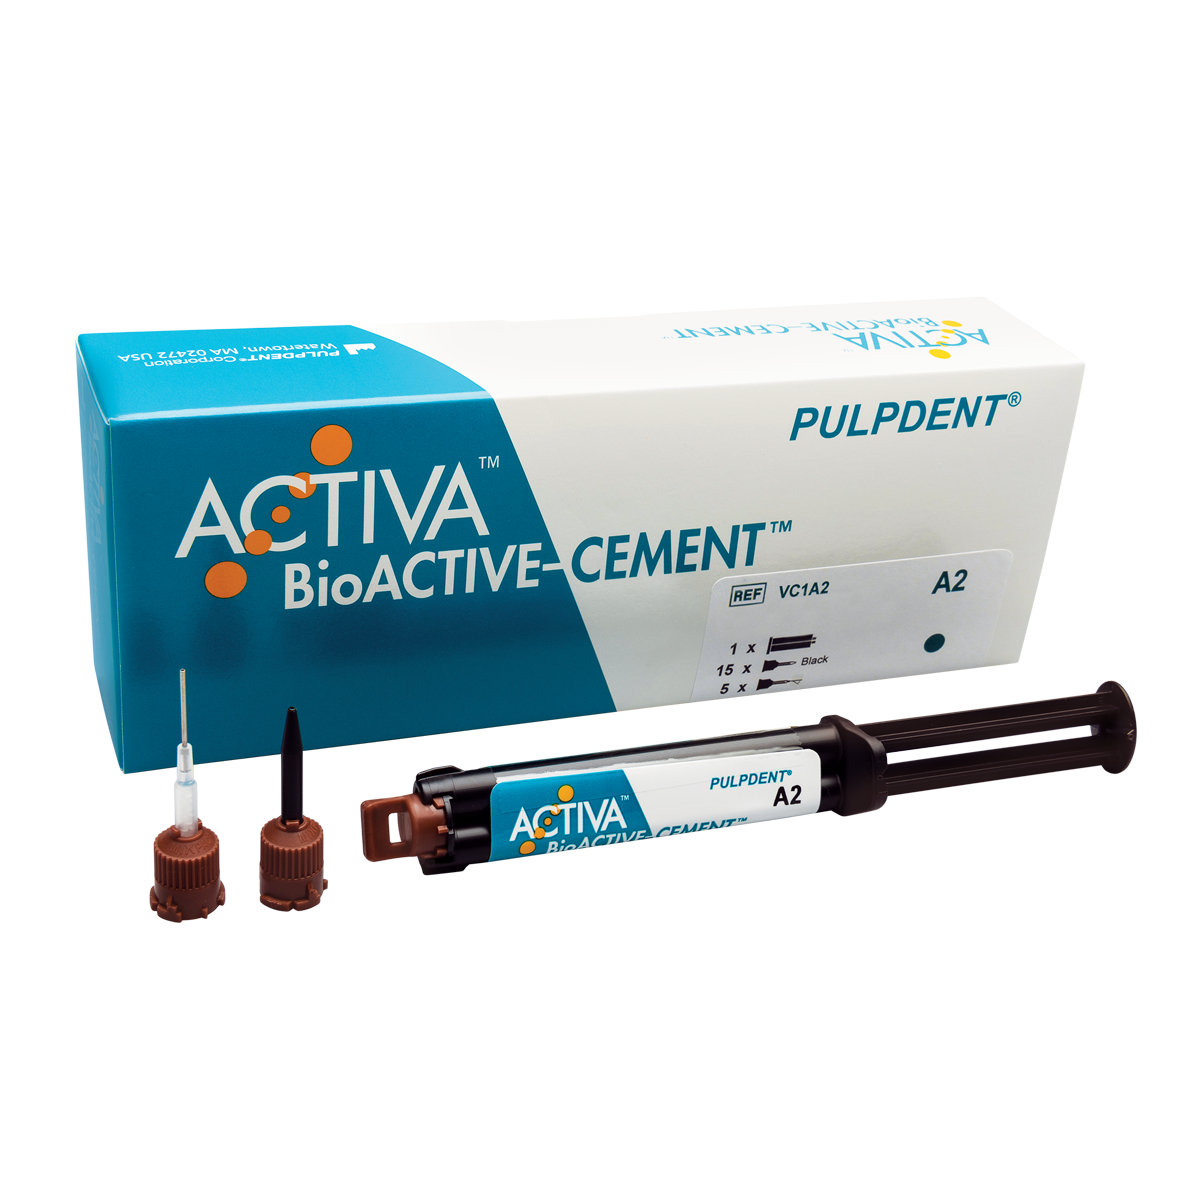 Pulpdent ACTIVA BioACTIVE-CEMENT